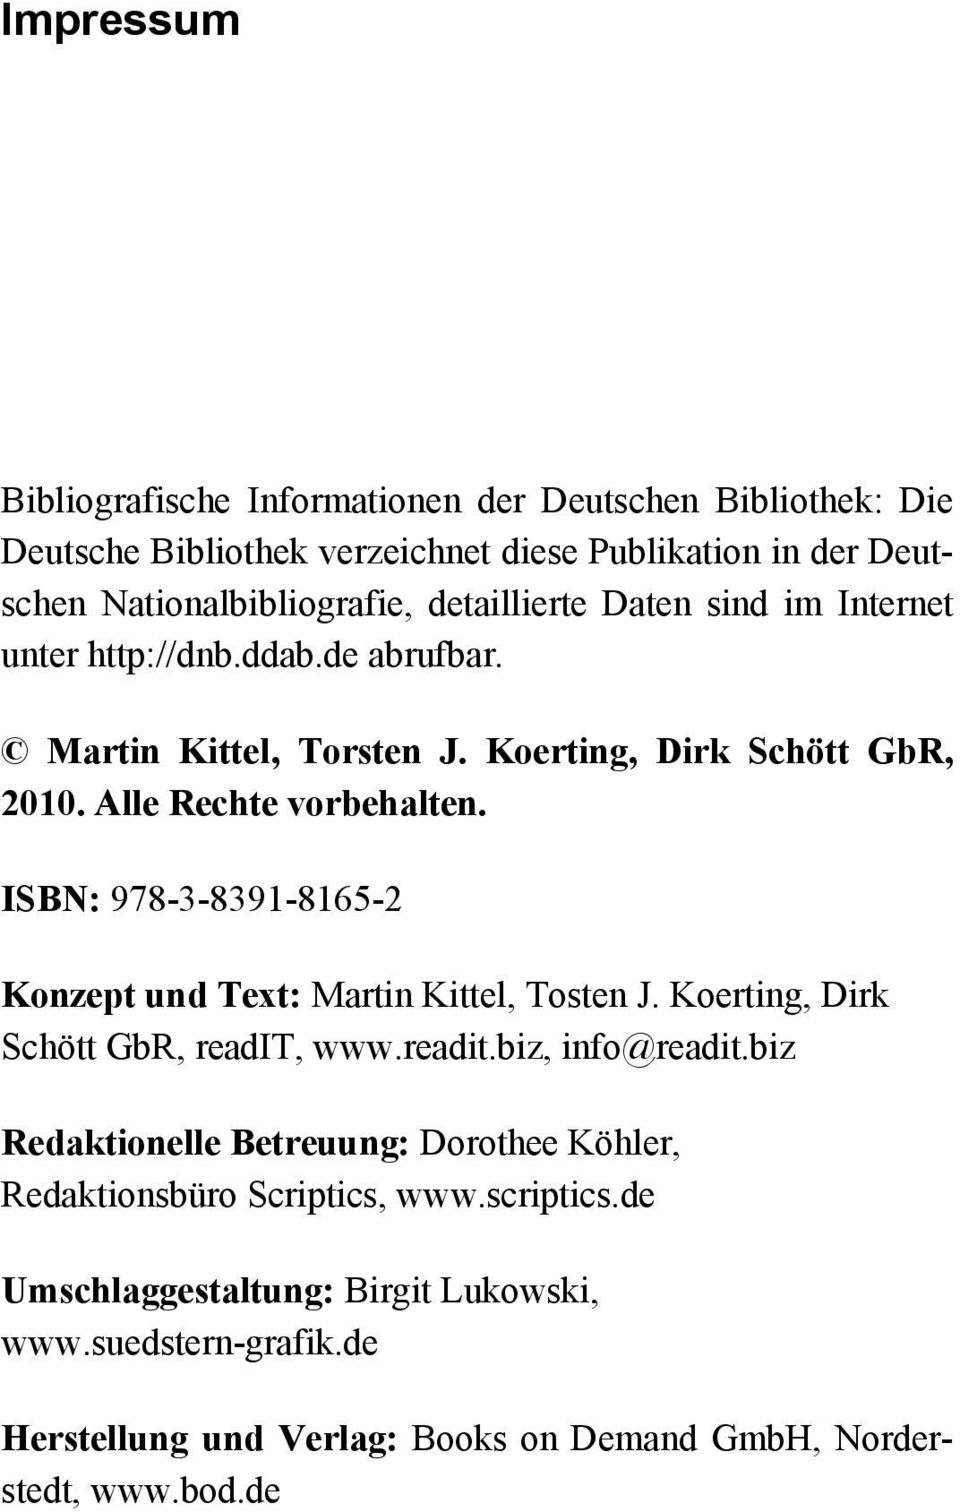 ISBN: 978-3-8391-8165-2 Konzept und Text: Martin Kittel, Tosten J. Koerting, Dirk Schött GbR, readit, www.readit.biz, info@readit.